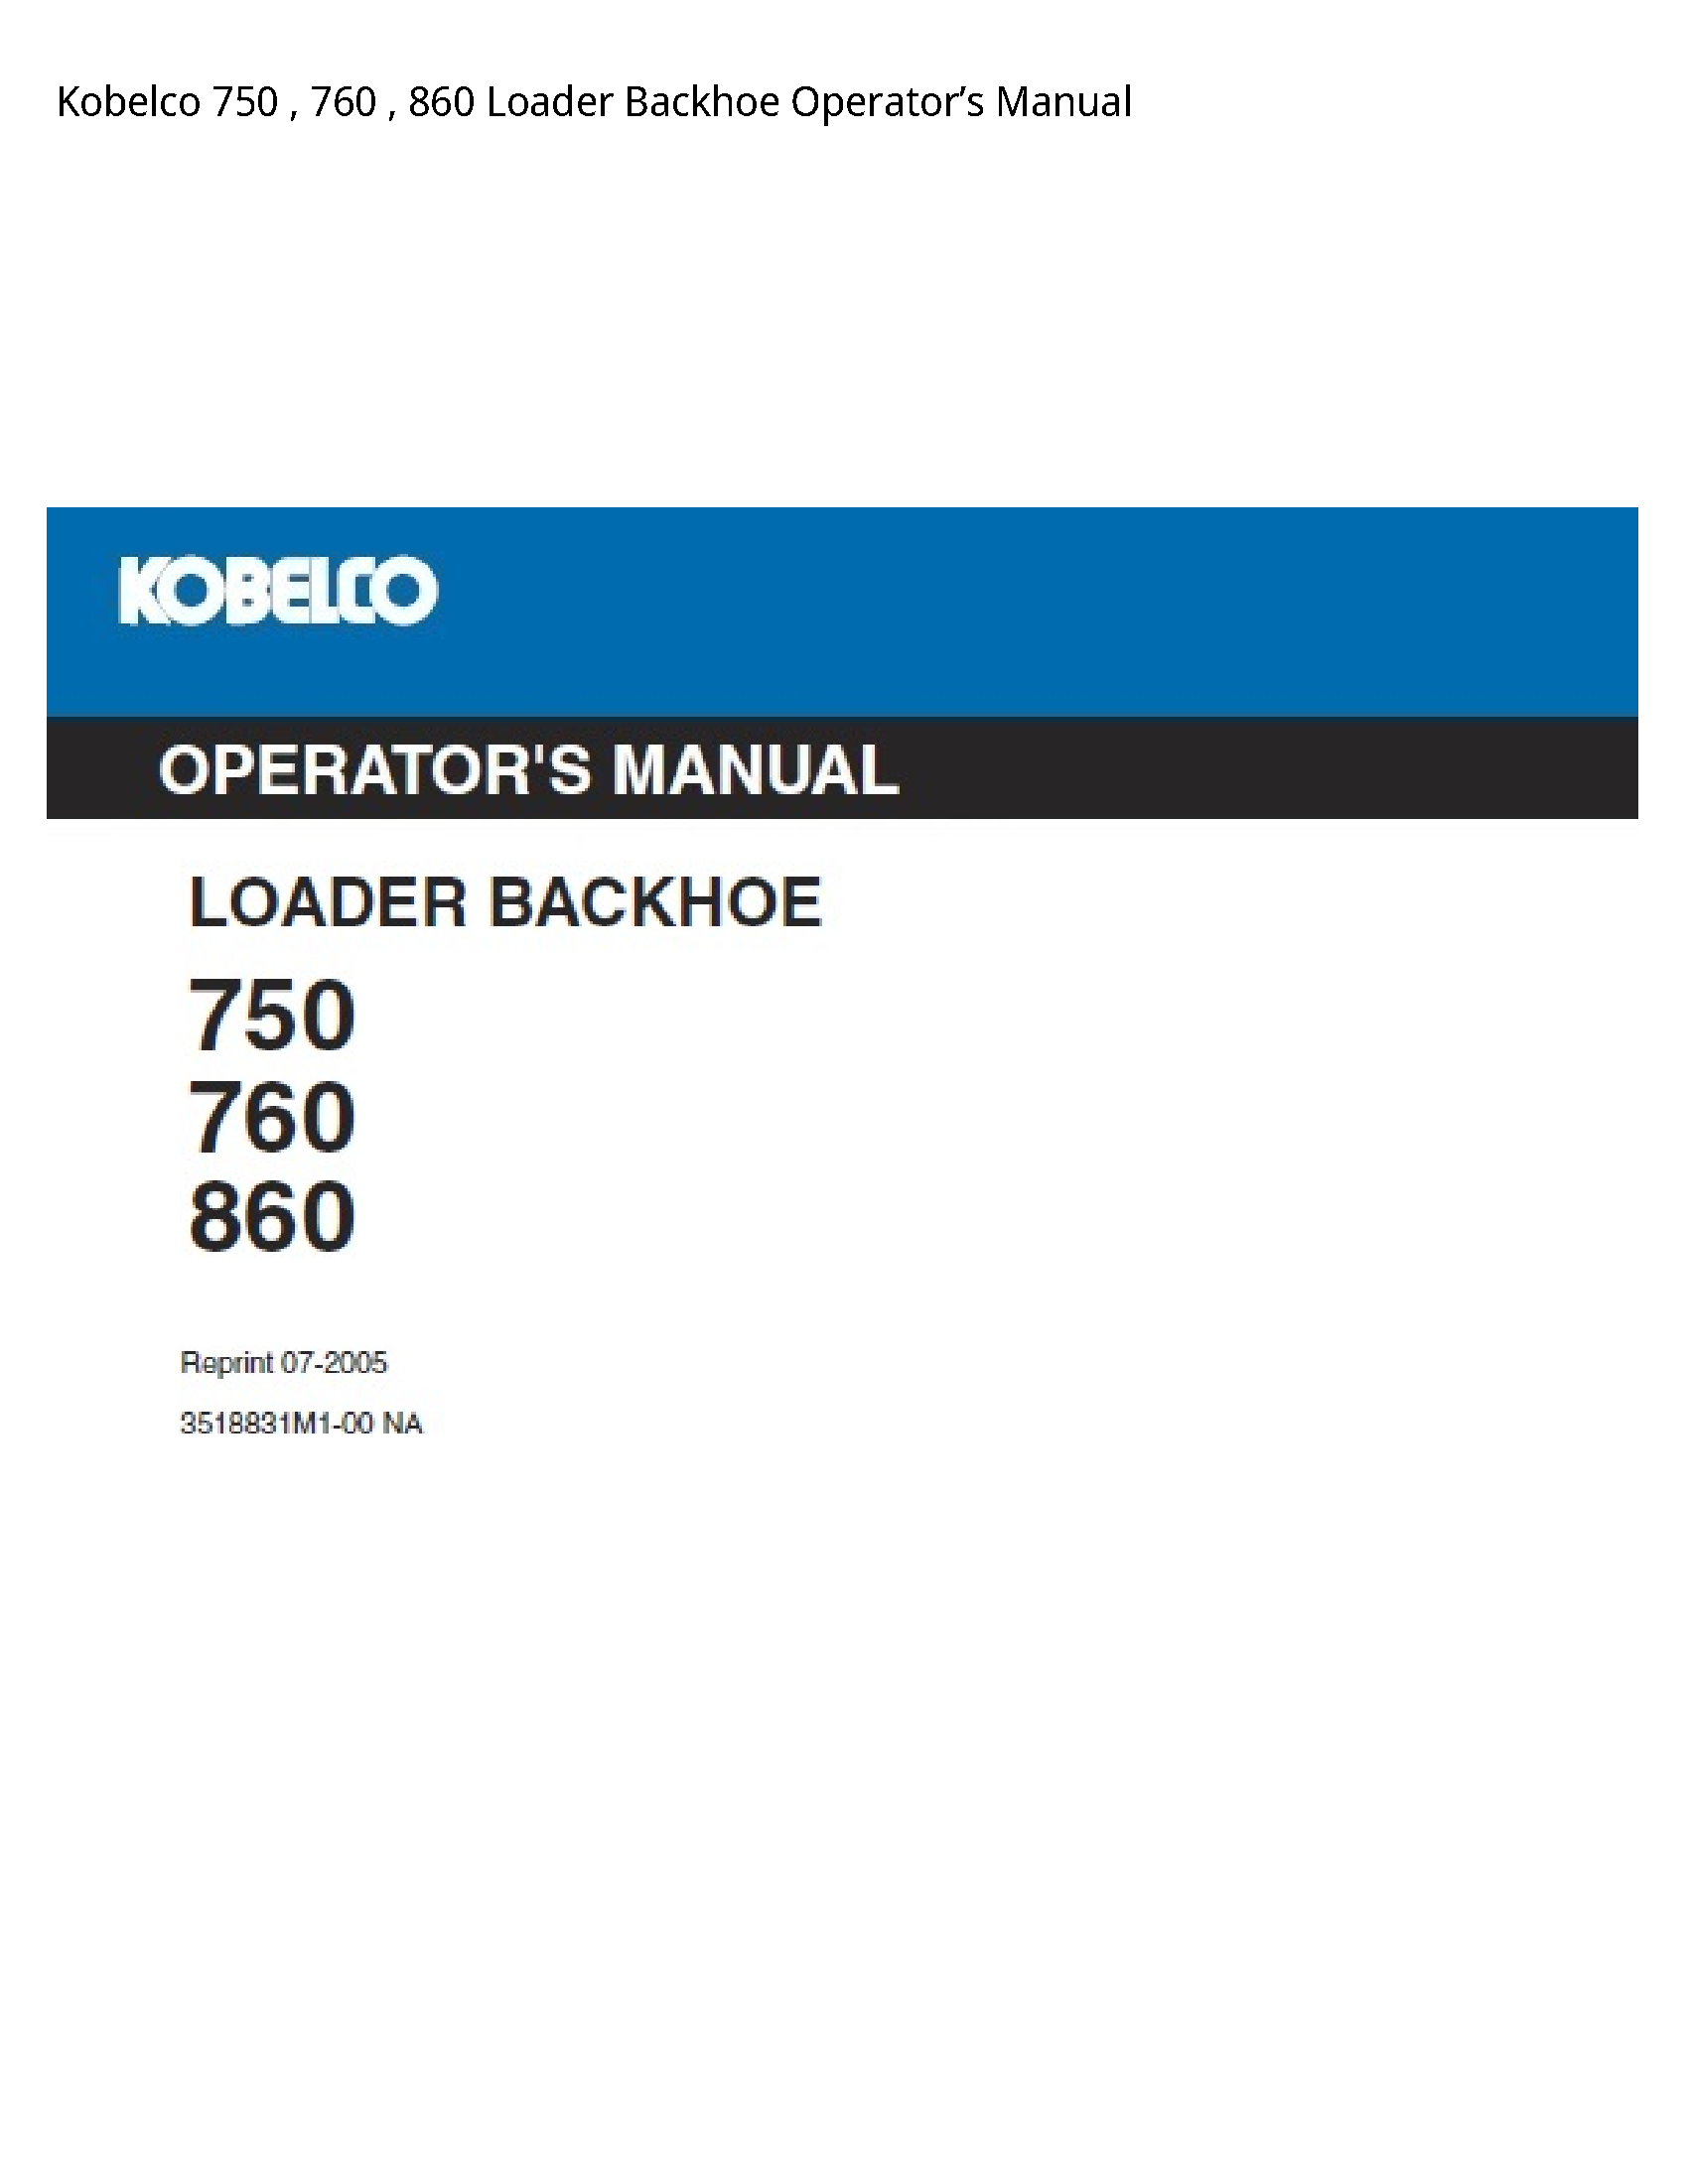 Kobelco 750 Loader Backhoe Operator’s manual